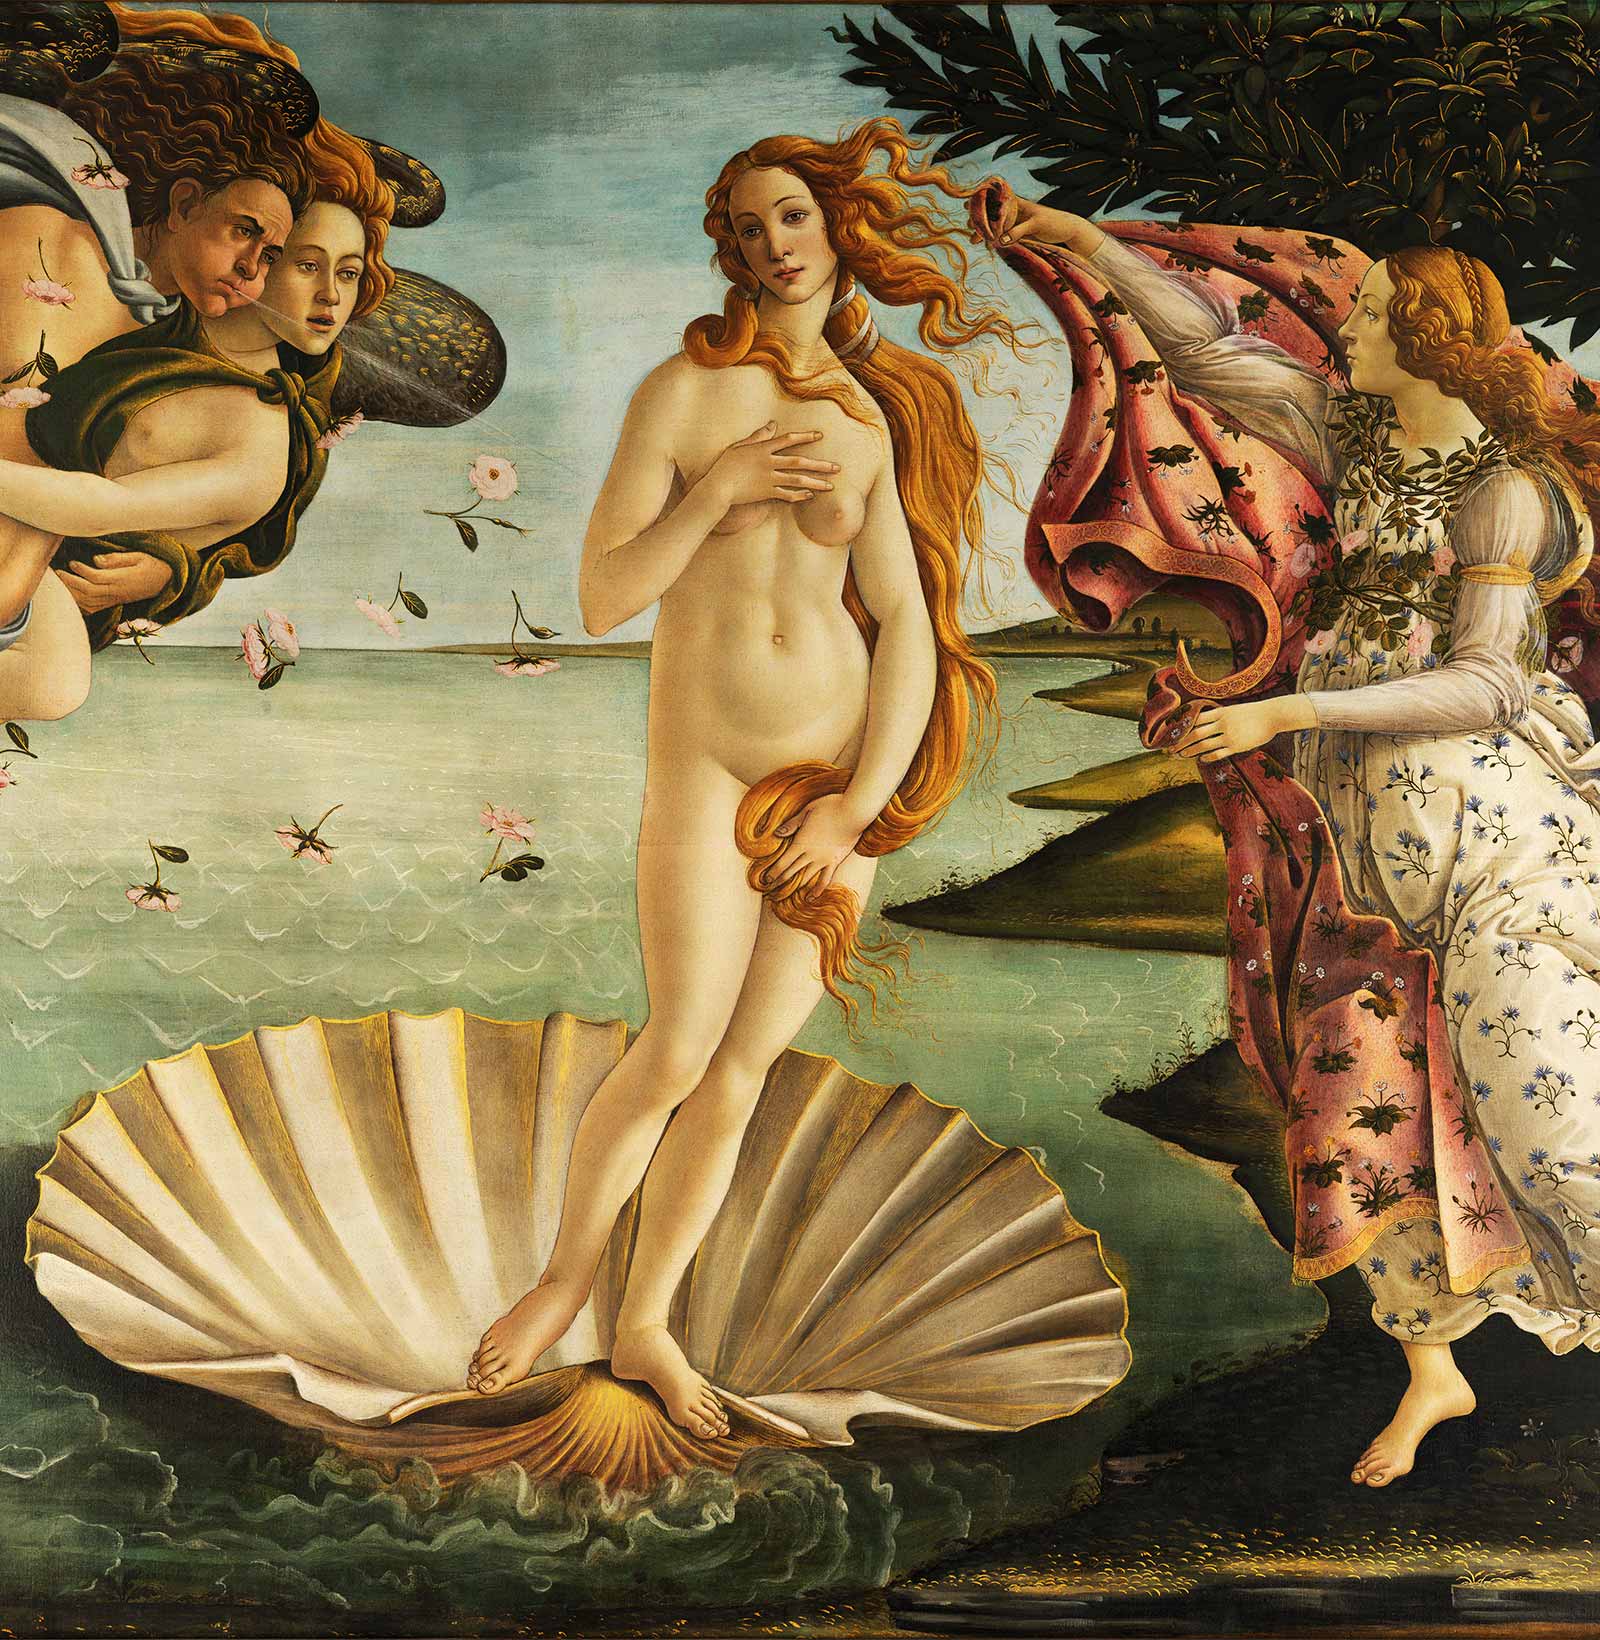 Sandro Botticelli, The Birth of Venus (1486)